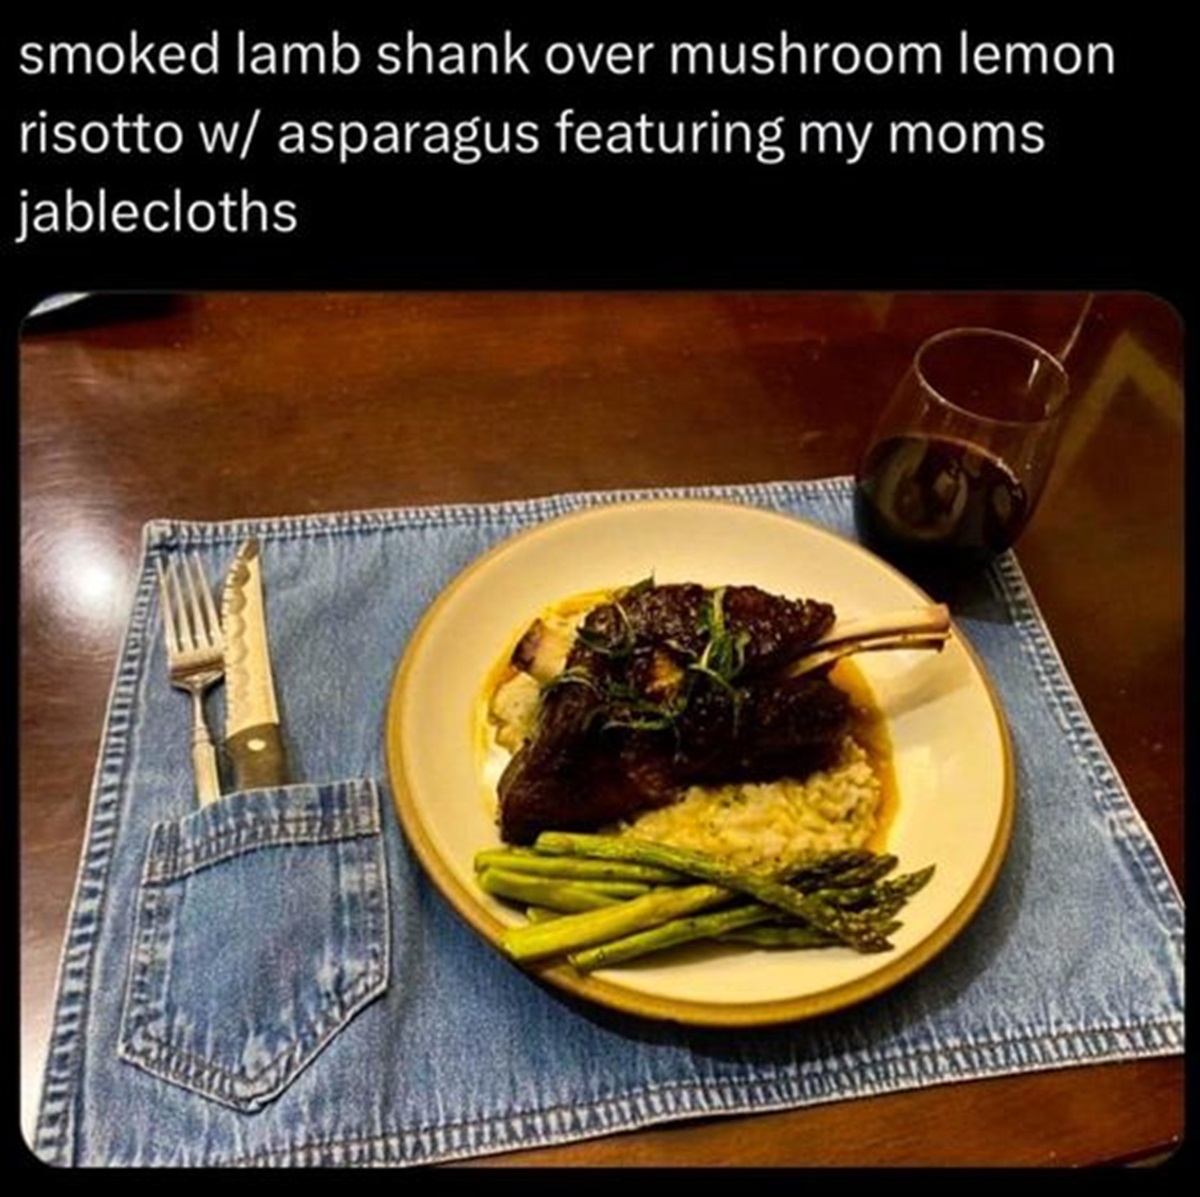 Smoked lamb shank - smoked lamb shank over mushroom lemon risotto w asparagus featuring my moms jablecloths